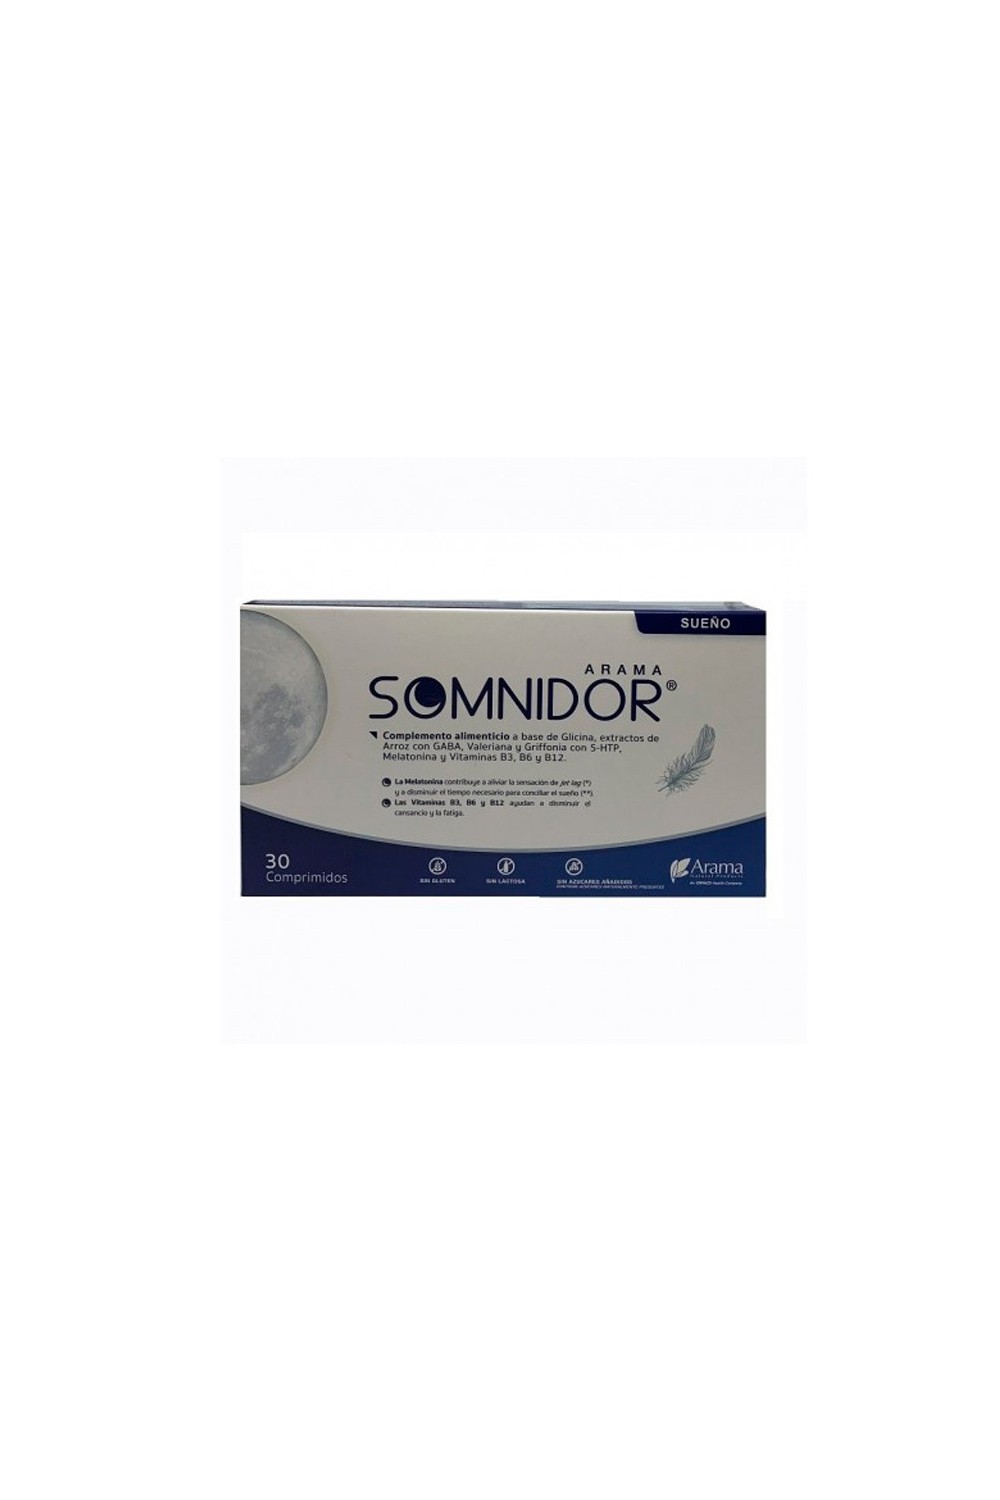 Pharmadiet Somnidor 30 Tablets